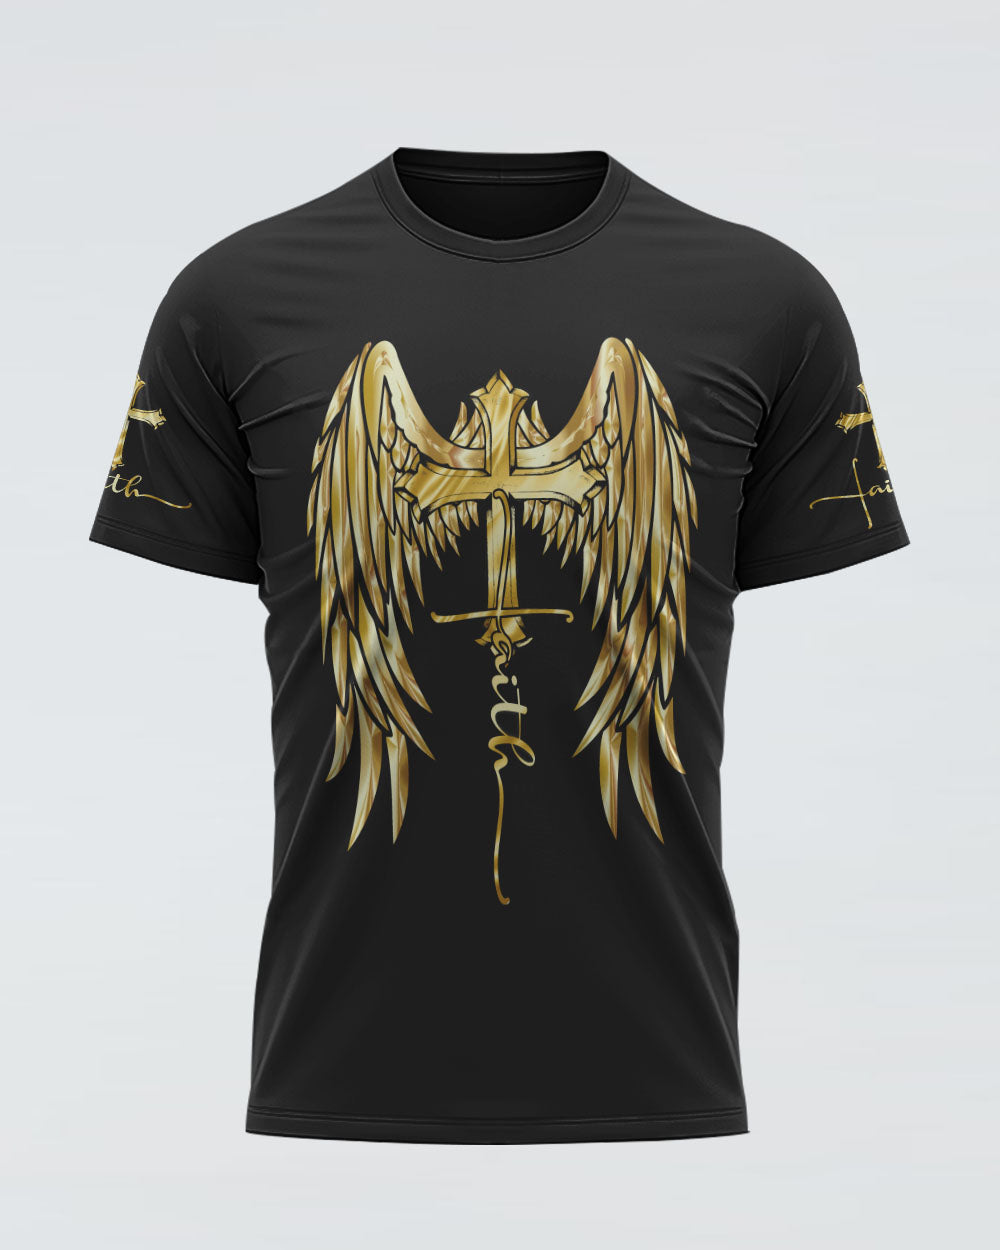 Gold Faith Wings Cross Women's Christian Tshirt